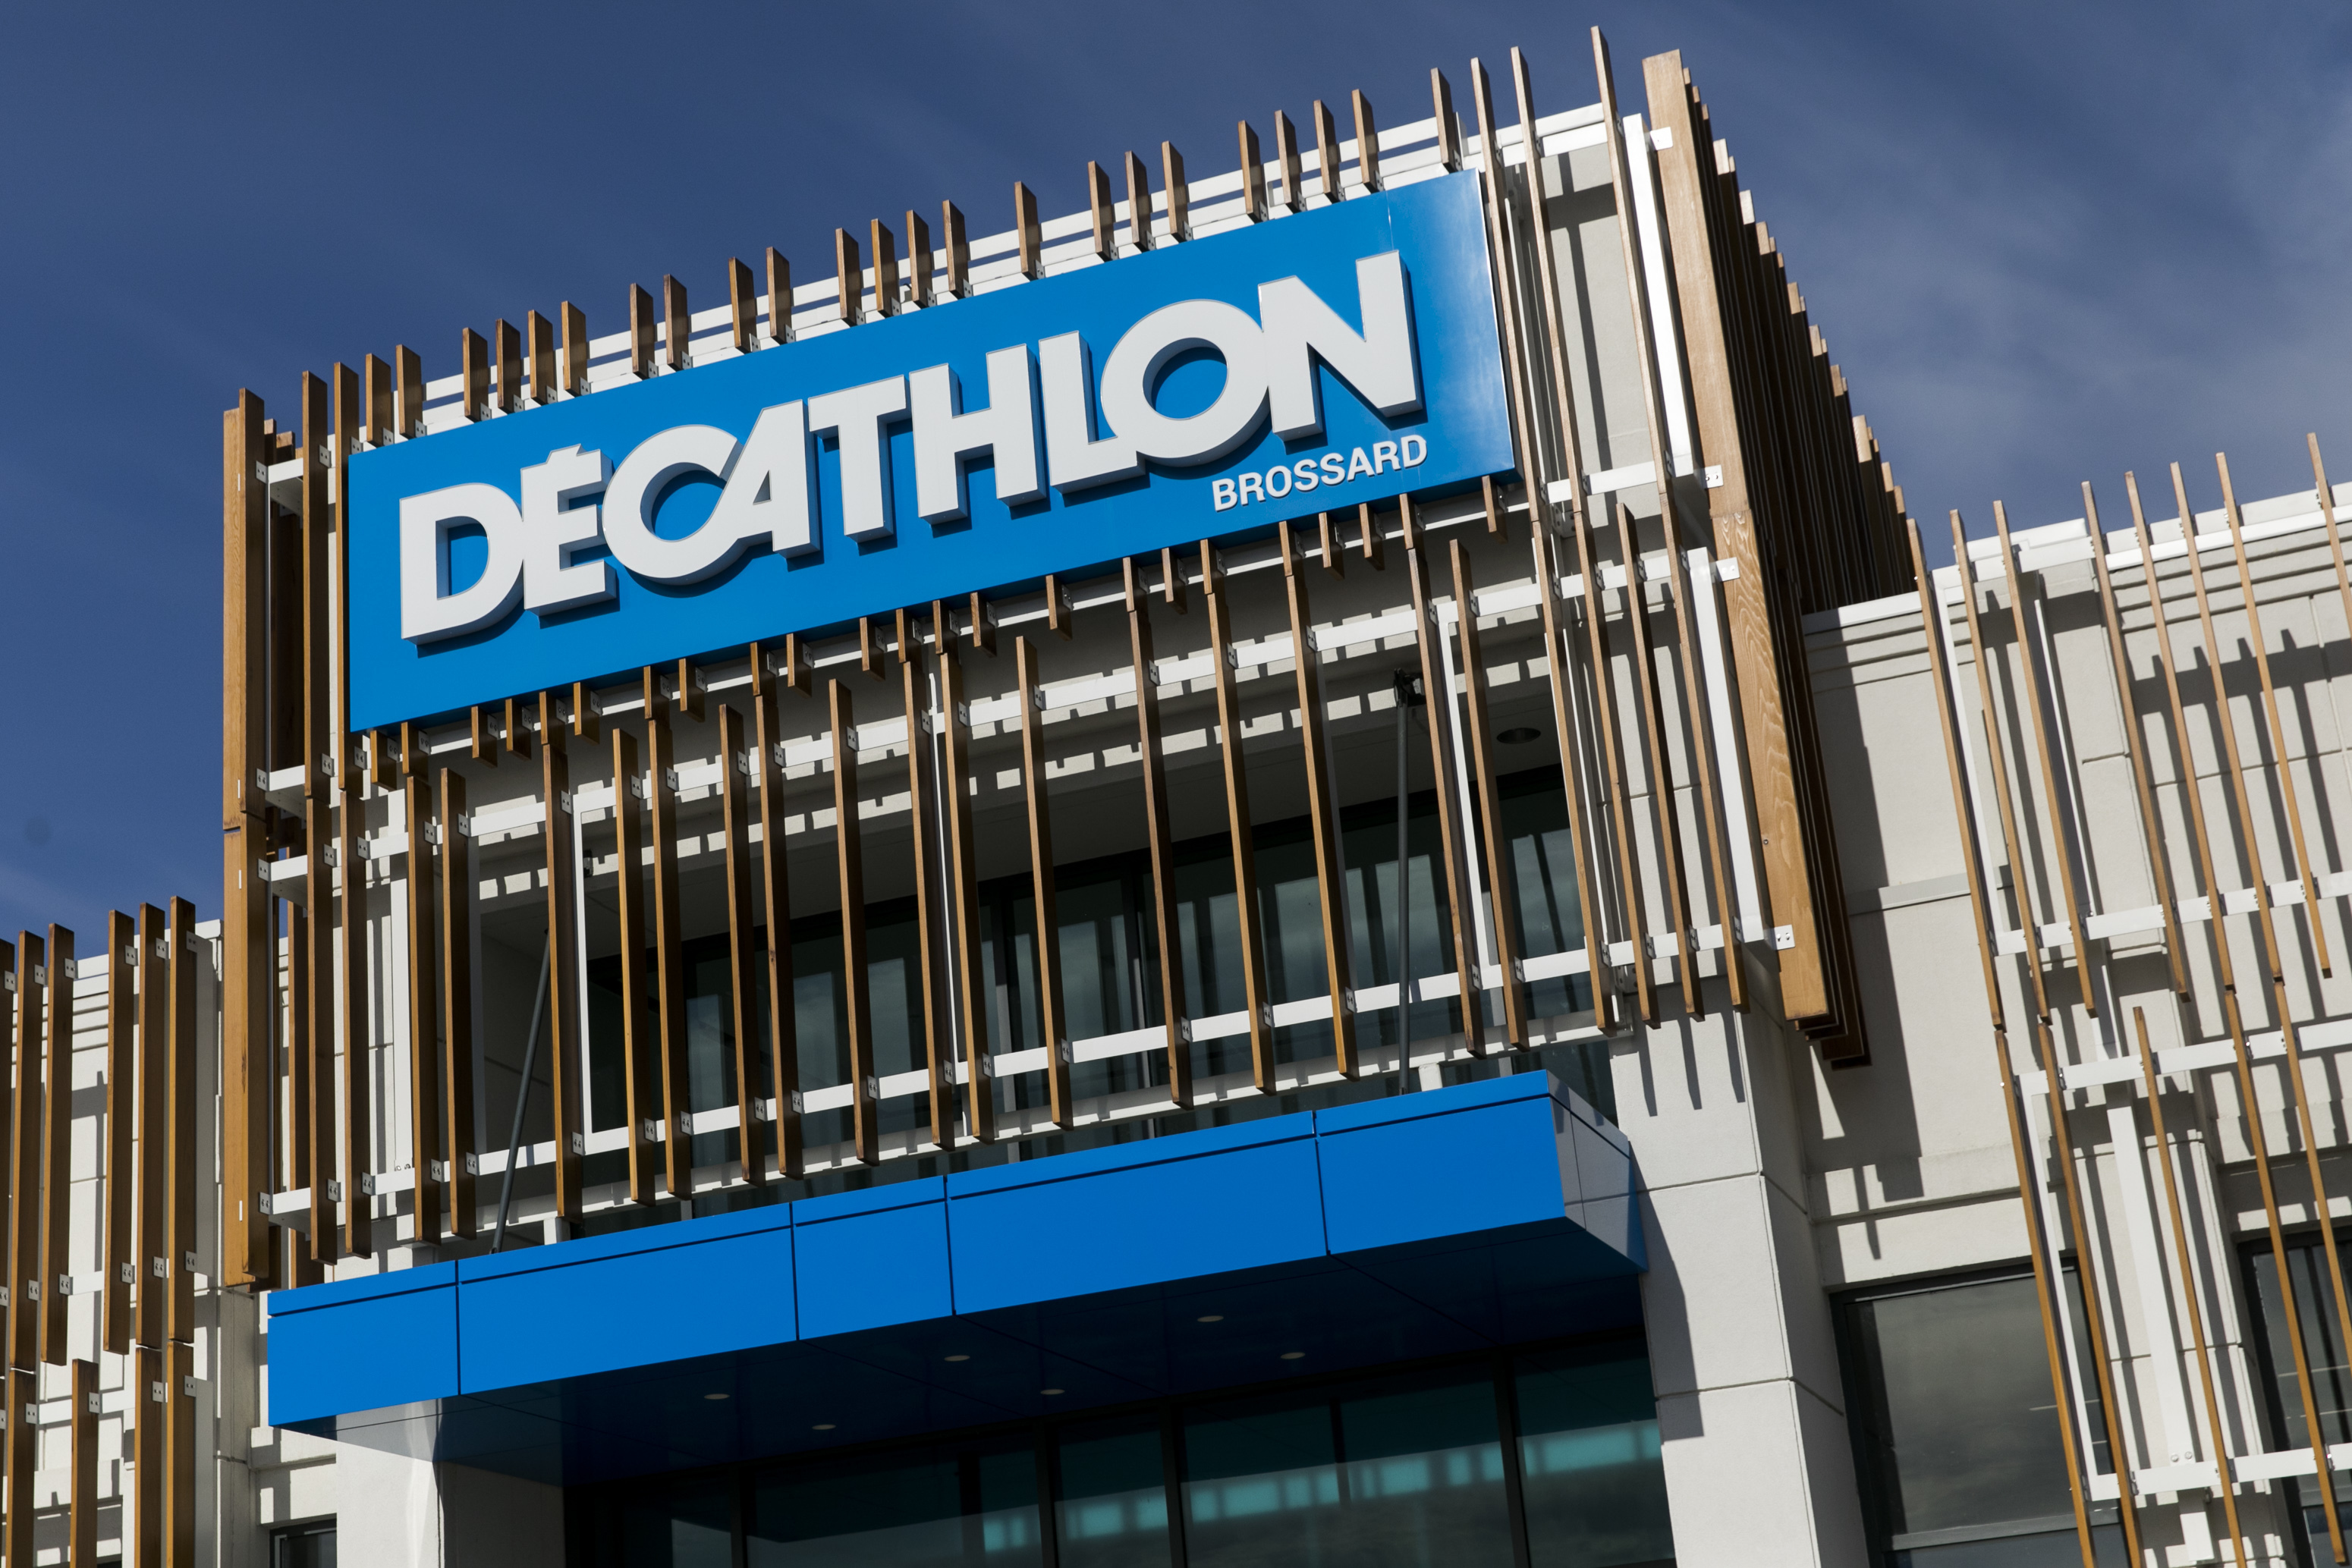 French sports retailer Decathlon's 